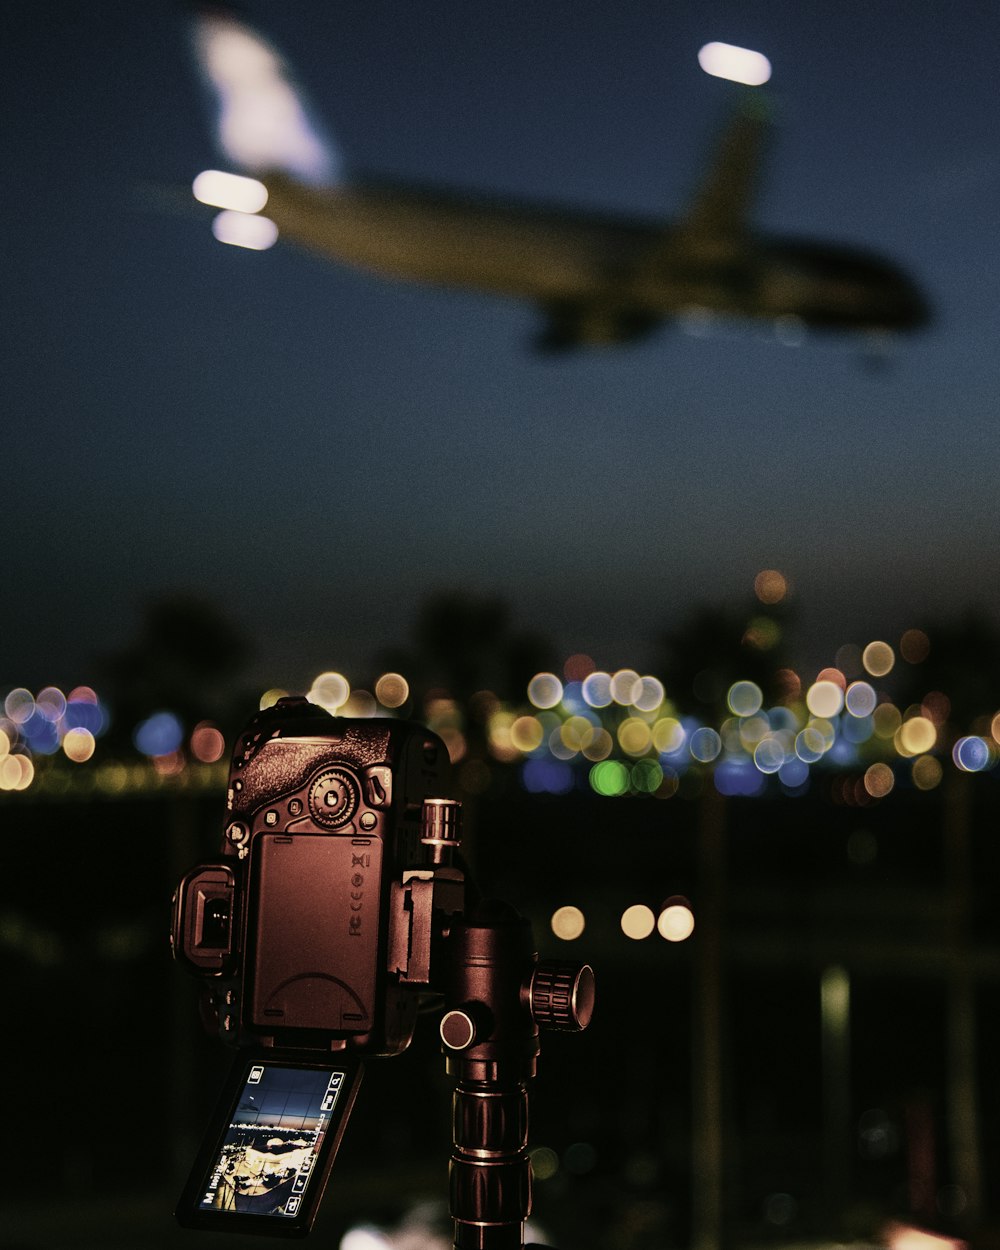 black video camera capturing an airplane in flight